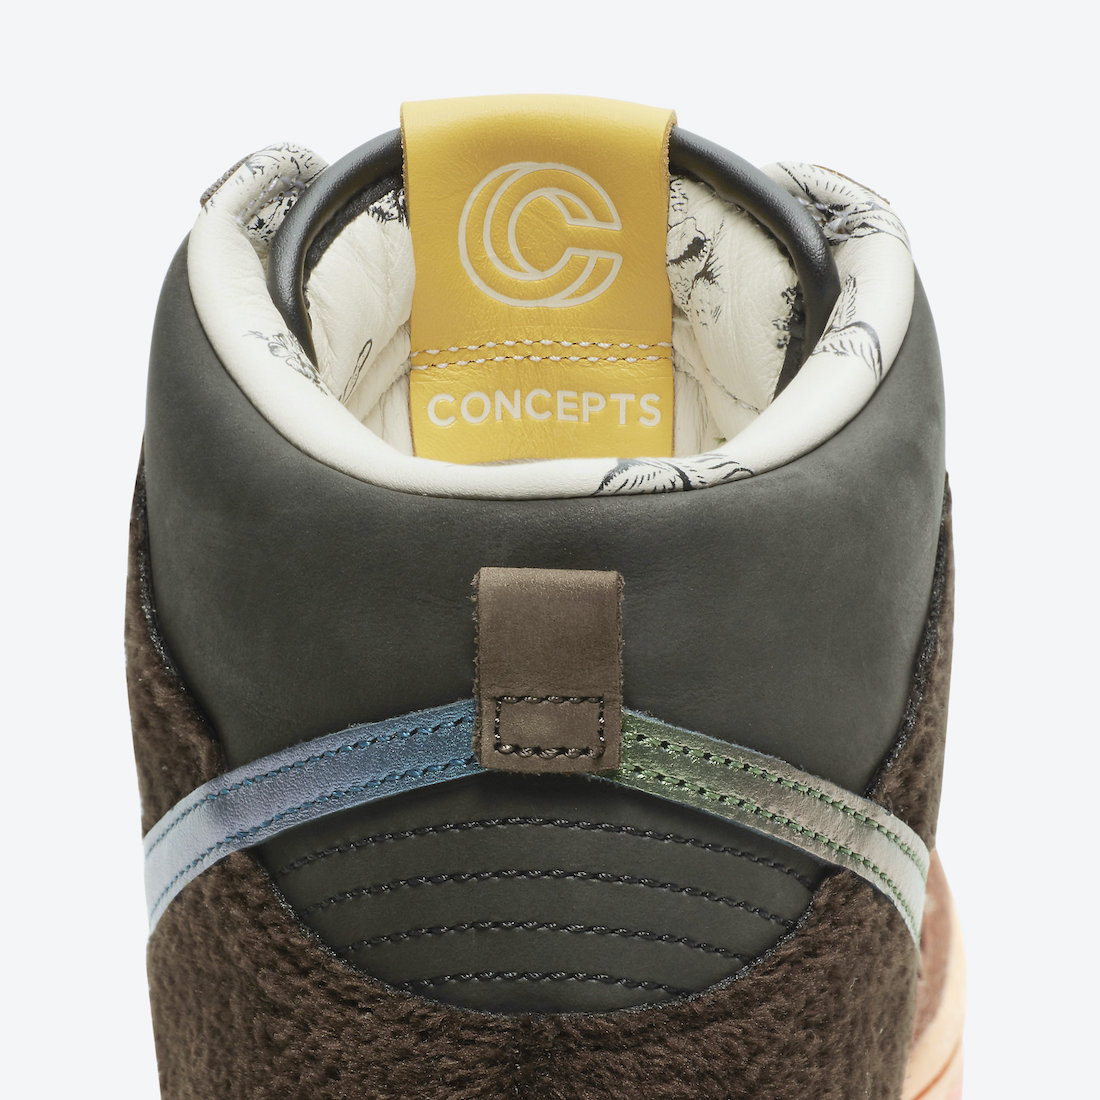 Concepts Nike SB Dunk High Turdunken DC6887-200 Release Date